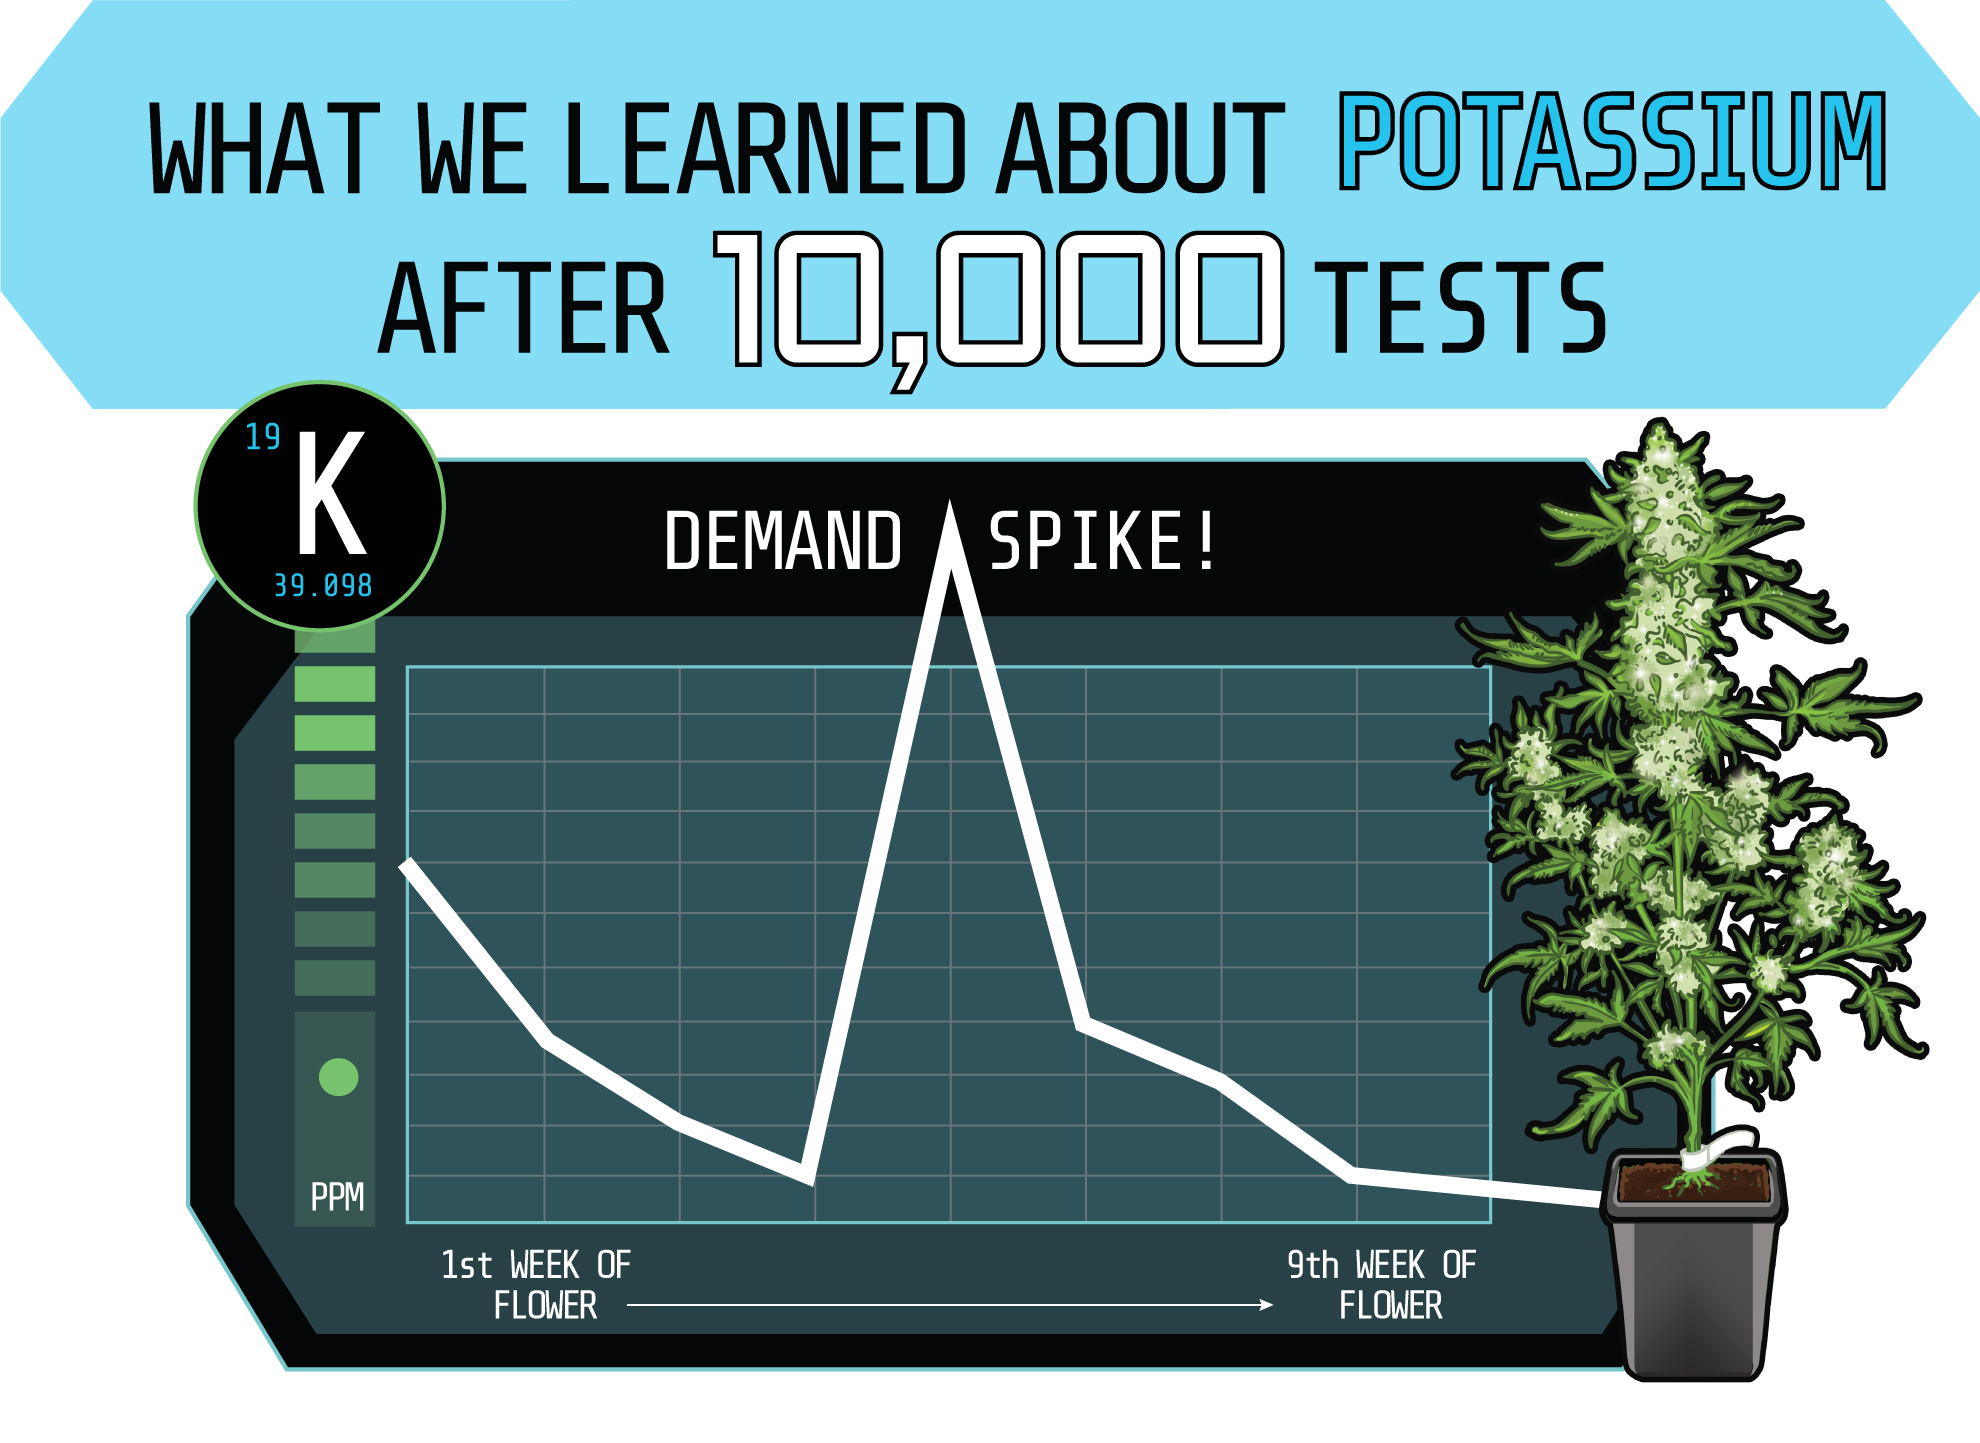 Potassium 1000Tests blog